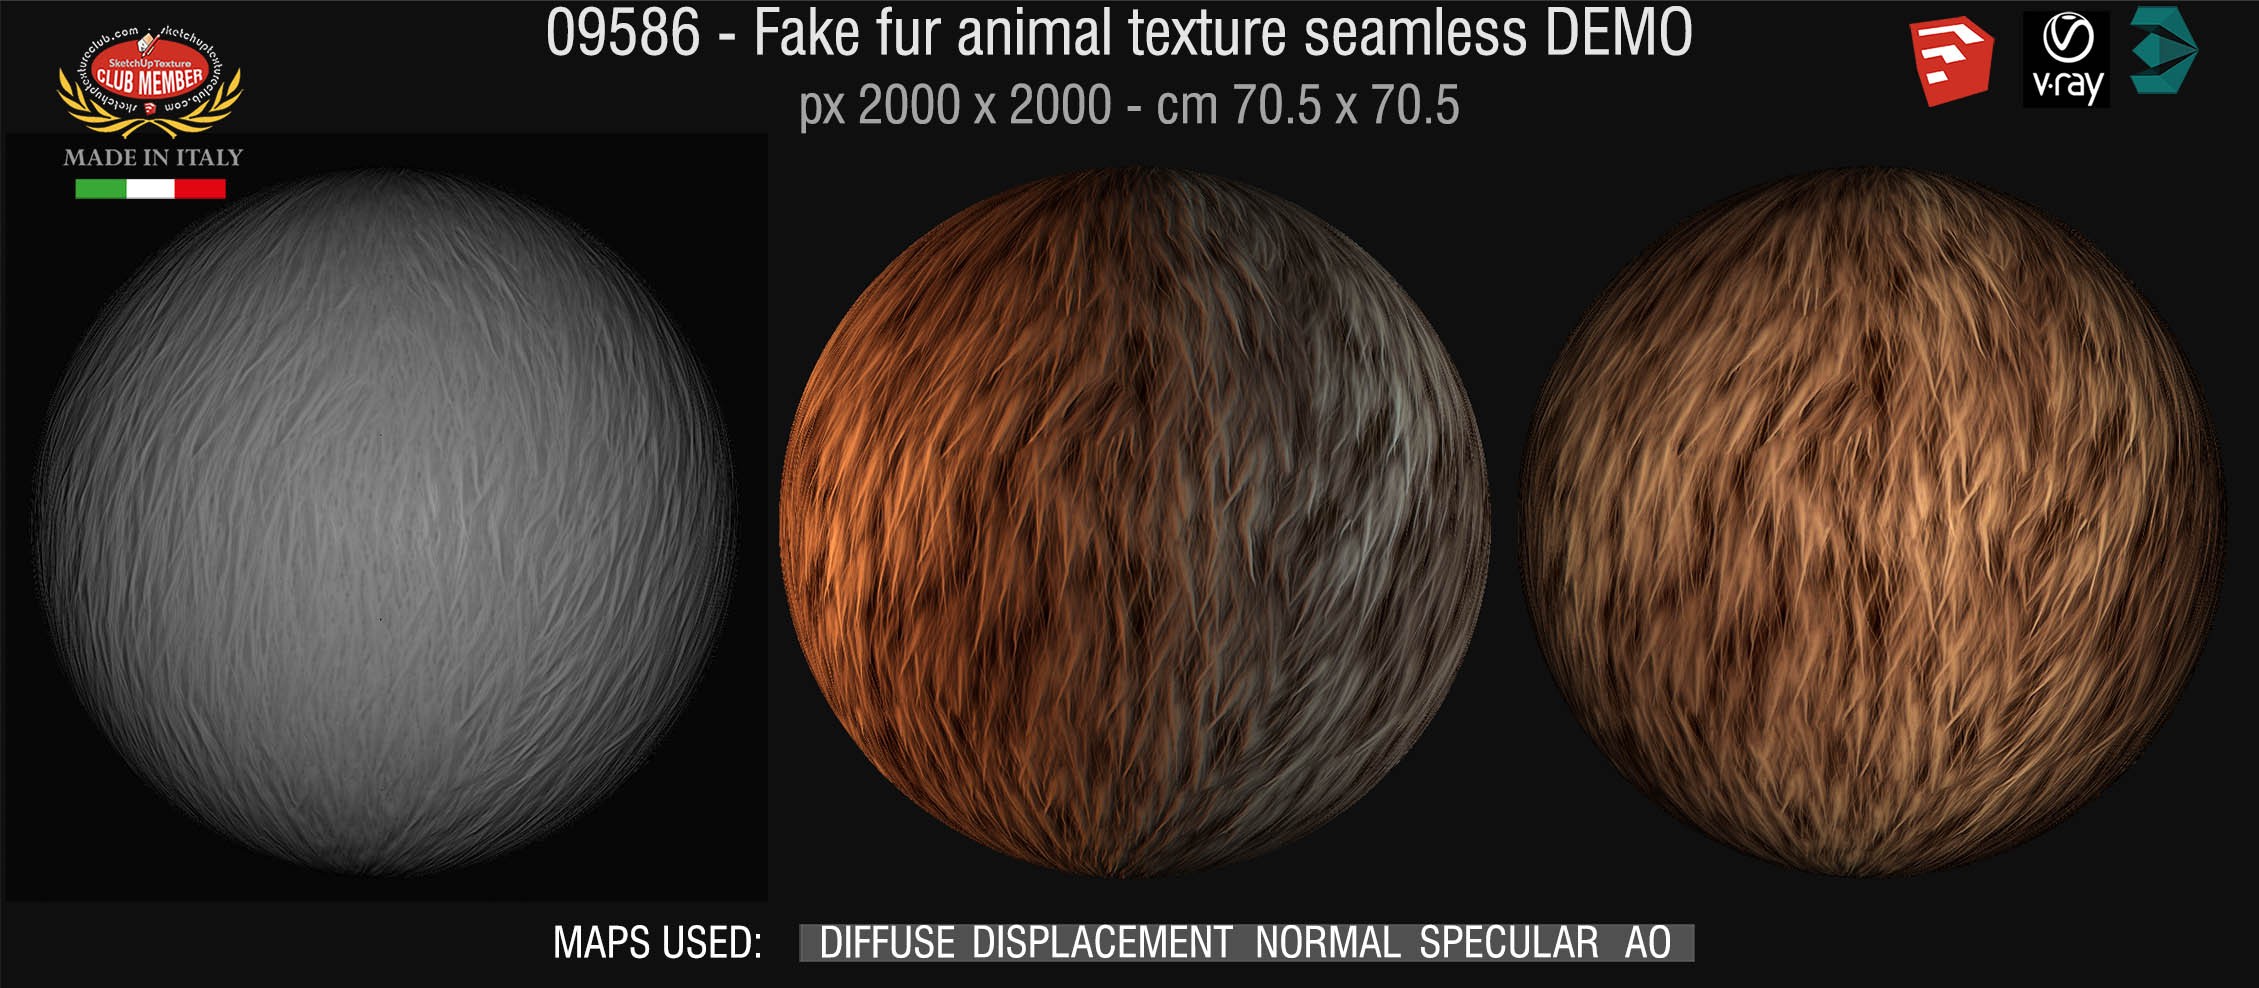 09586 HR fake fur animal texture seamless + maps DEMO